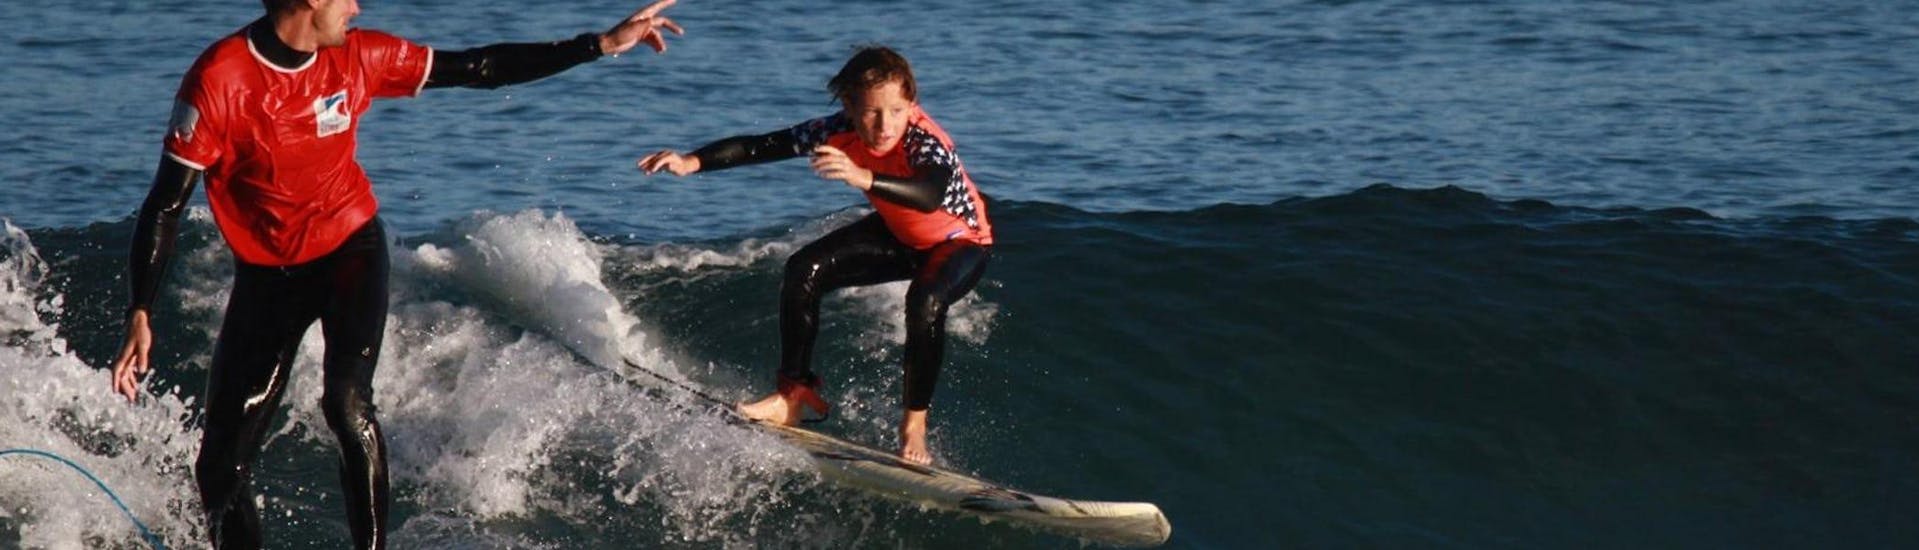 Ein Kind nimmt am Surfunterricht - inkl. Transfer - Fortgeschrittene bei Gold Coast Hendaye teil.